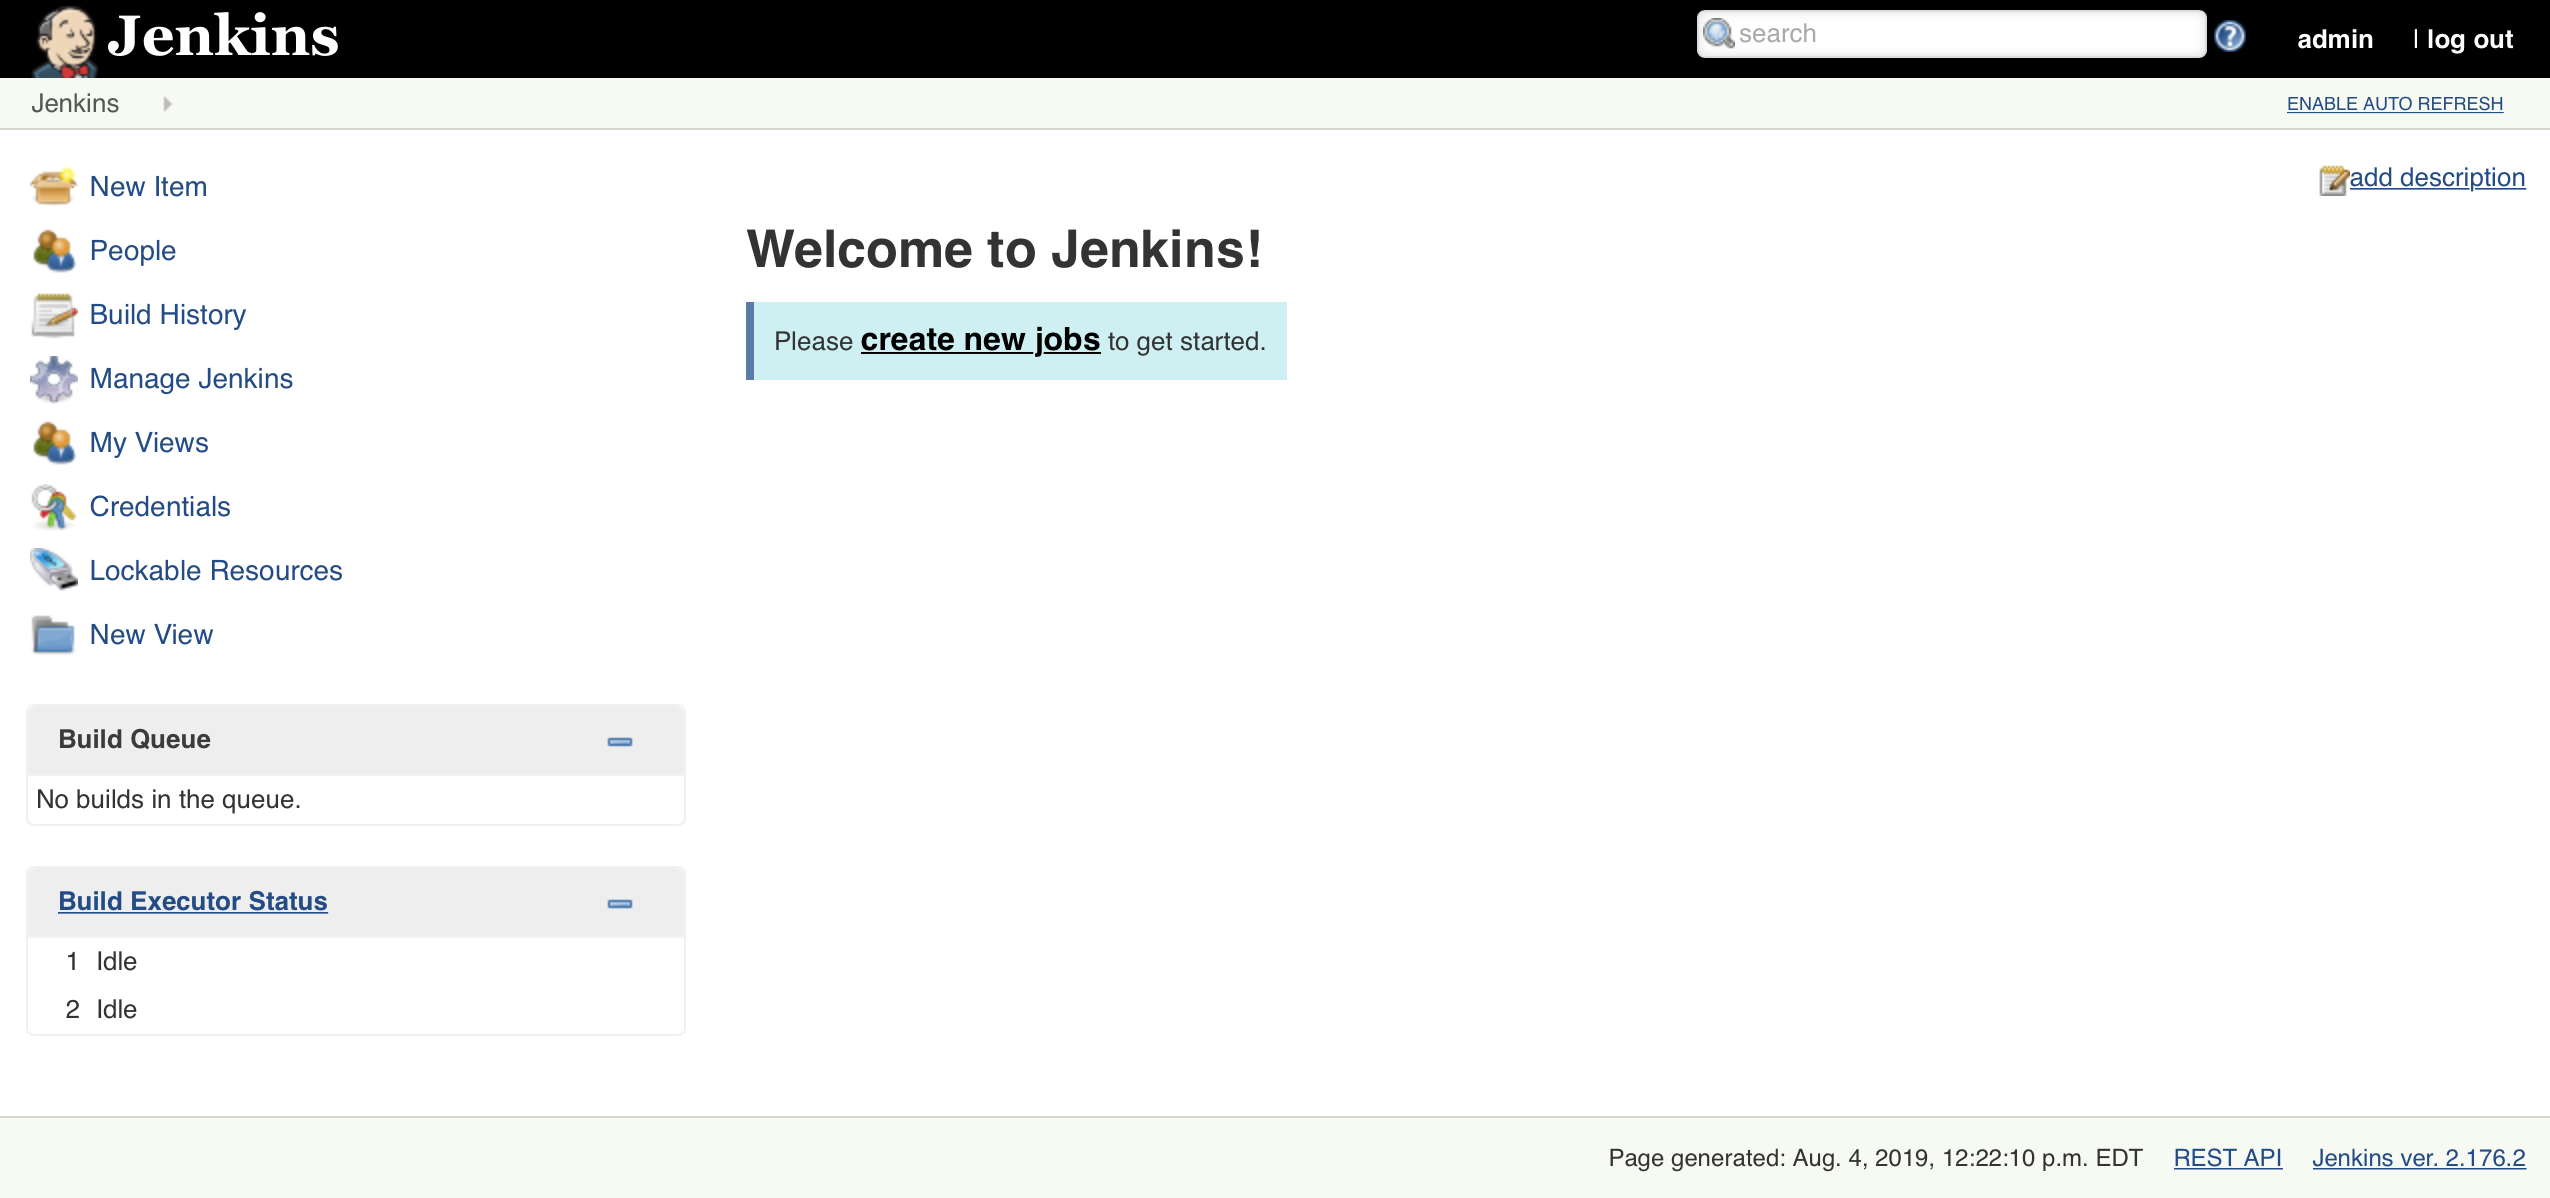 Welcome - Jenkins